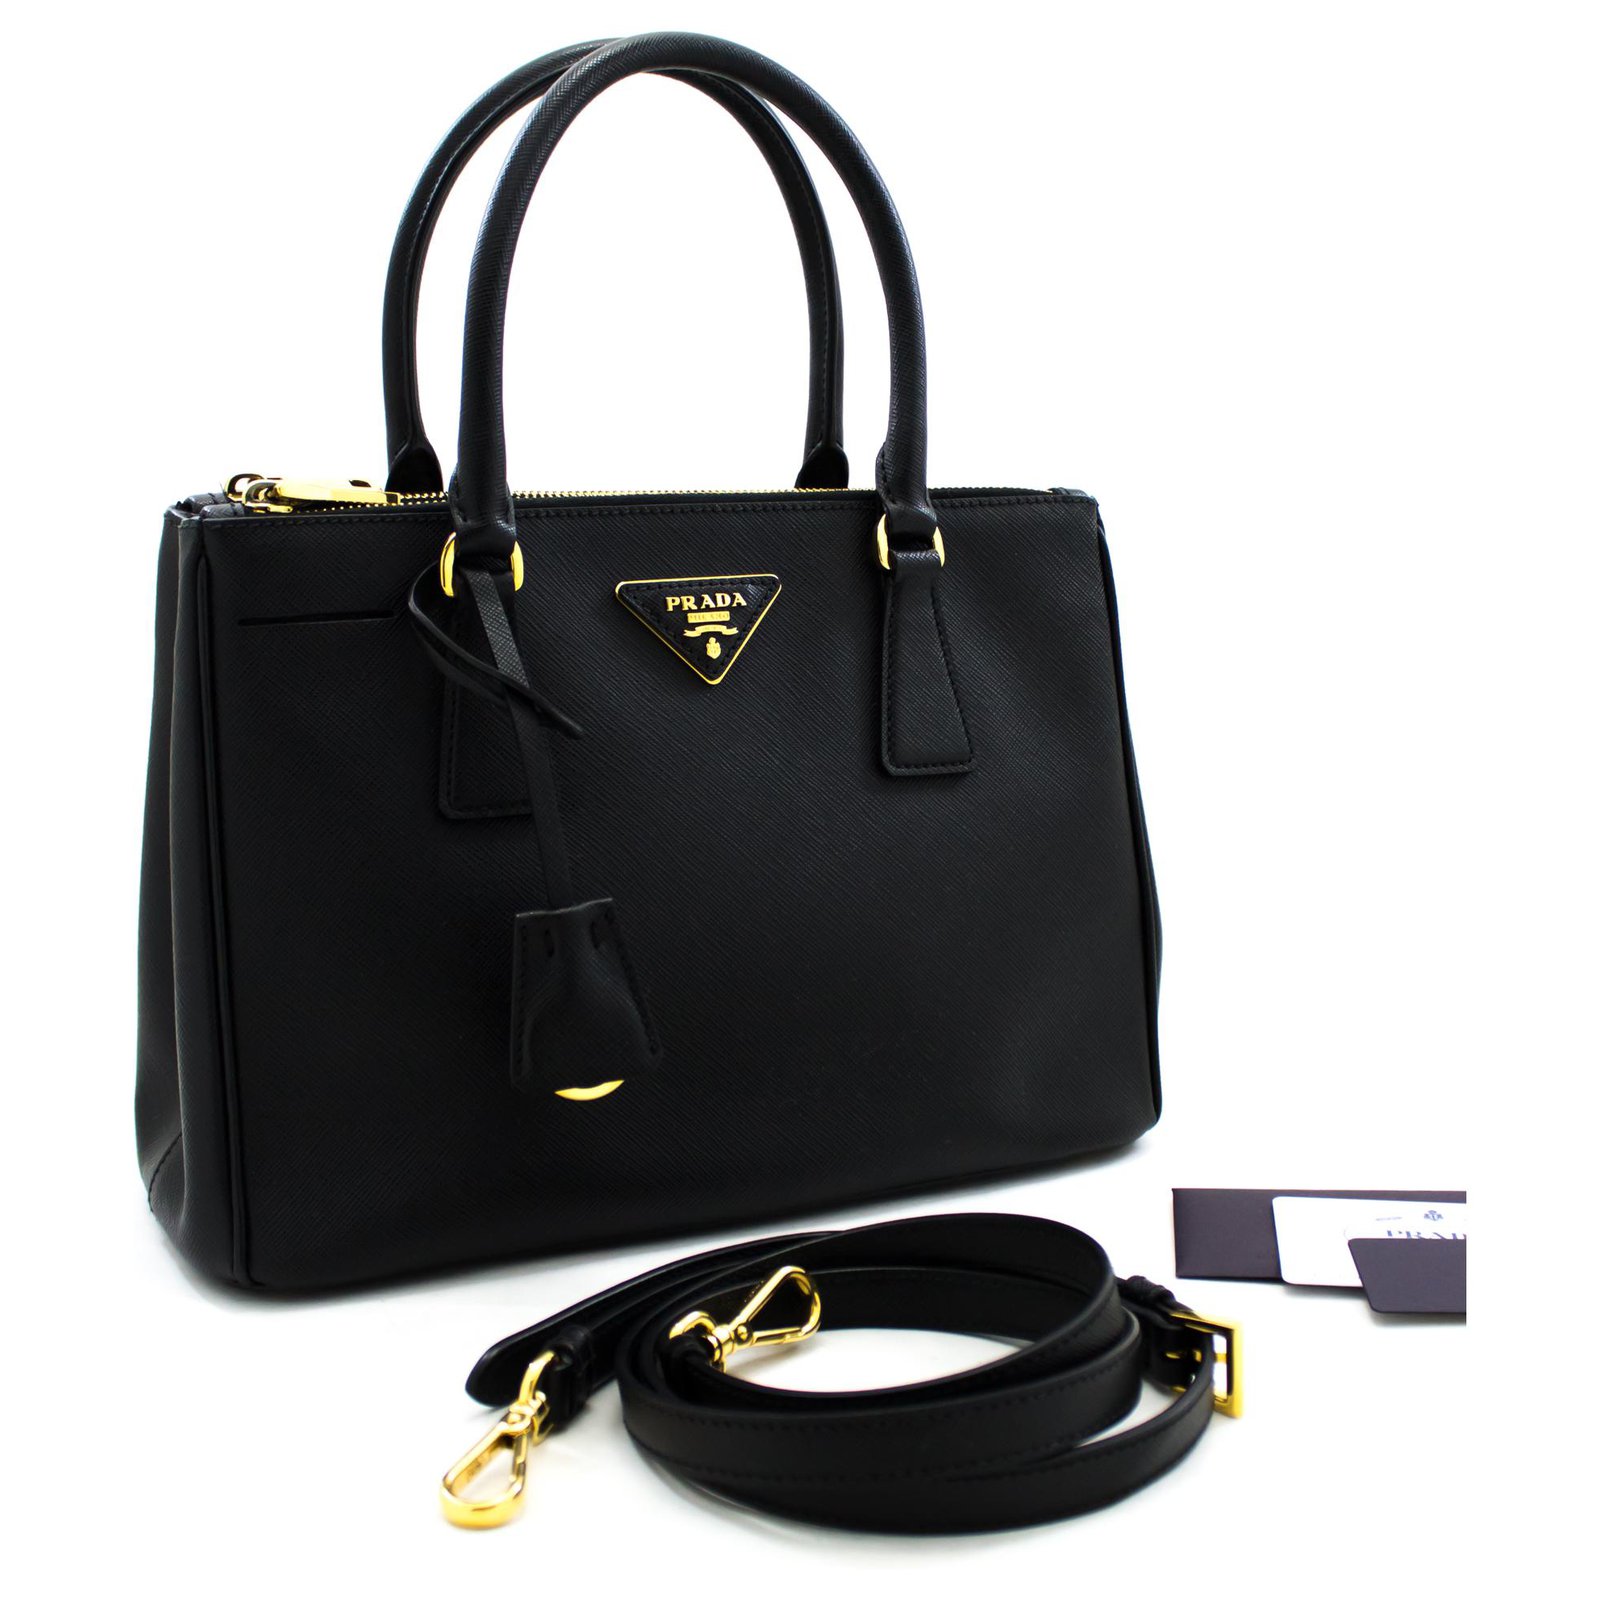 Prada Saffiano Luxe Tote and Shoulder Bag Black